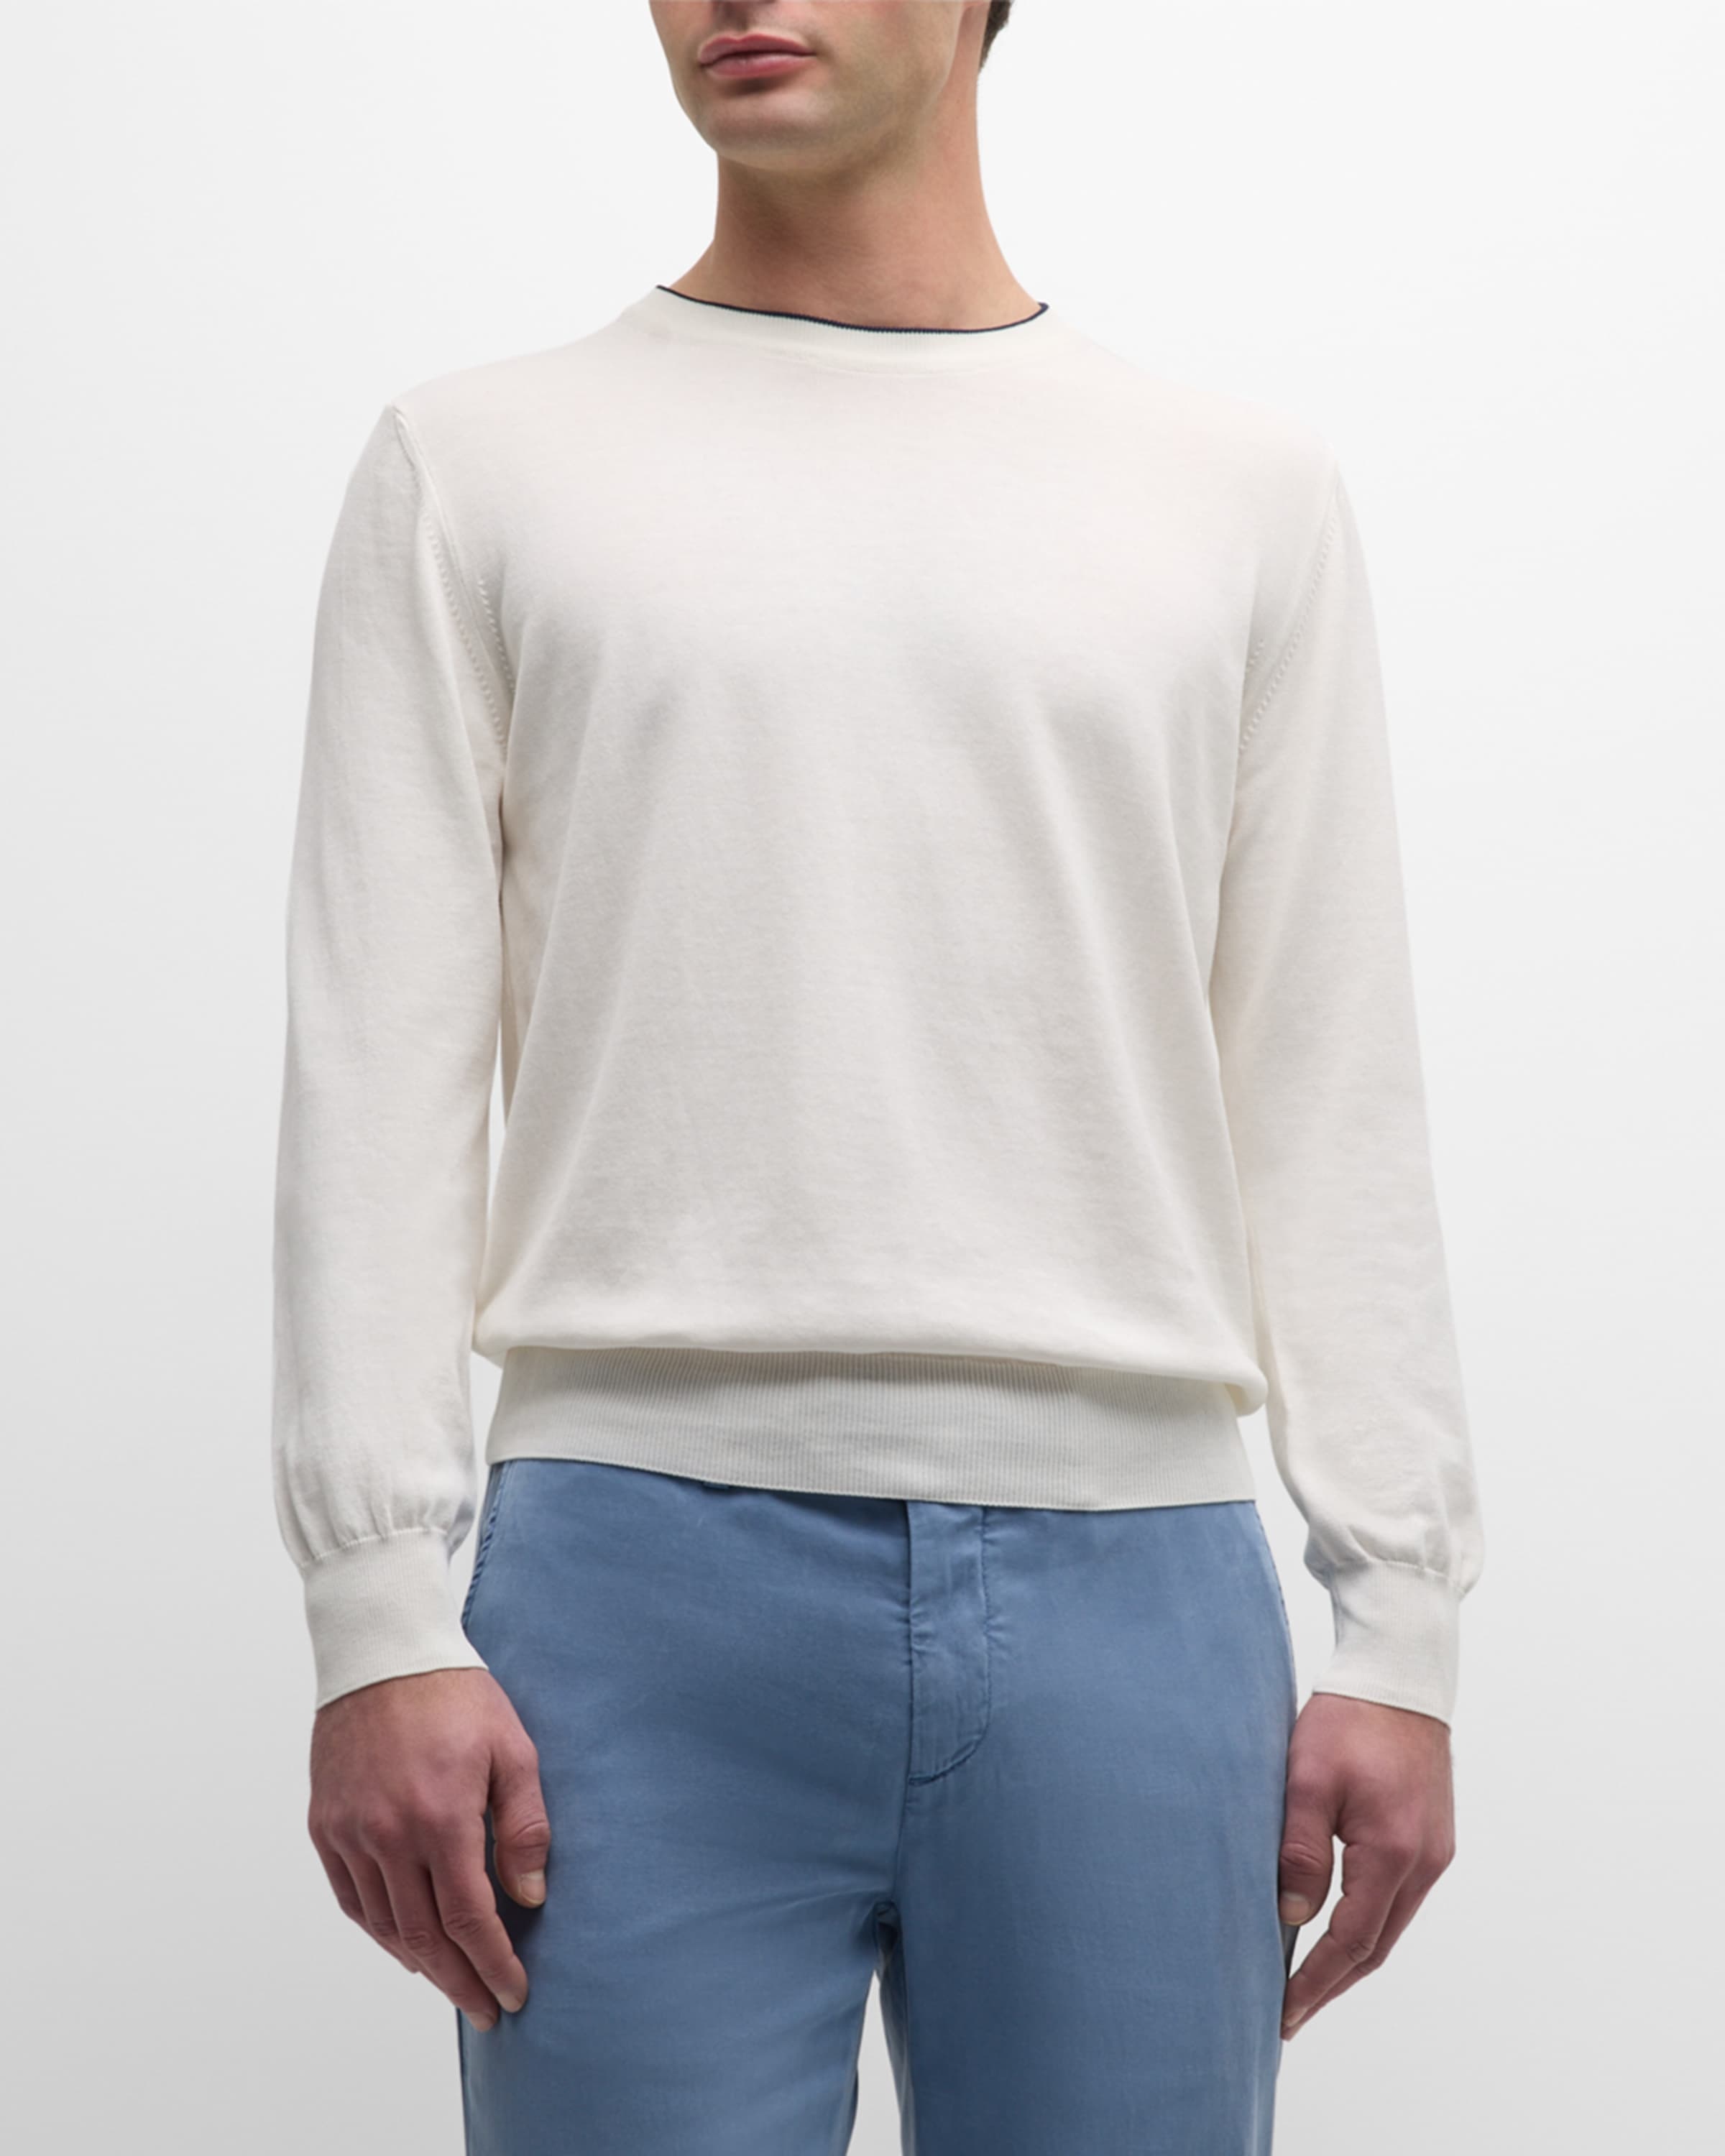 Men's Cotton Crewneck Sweater - 2